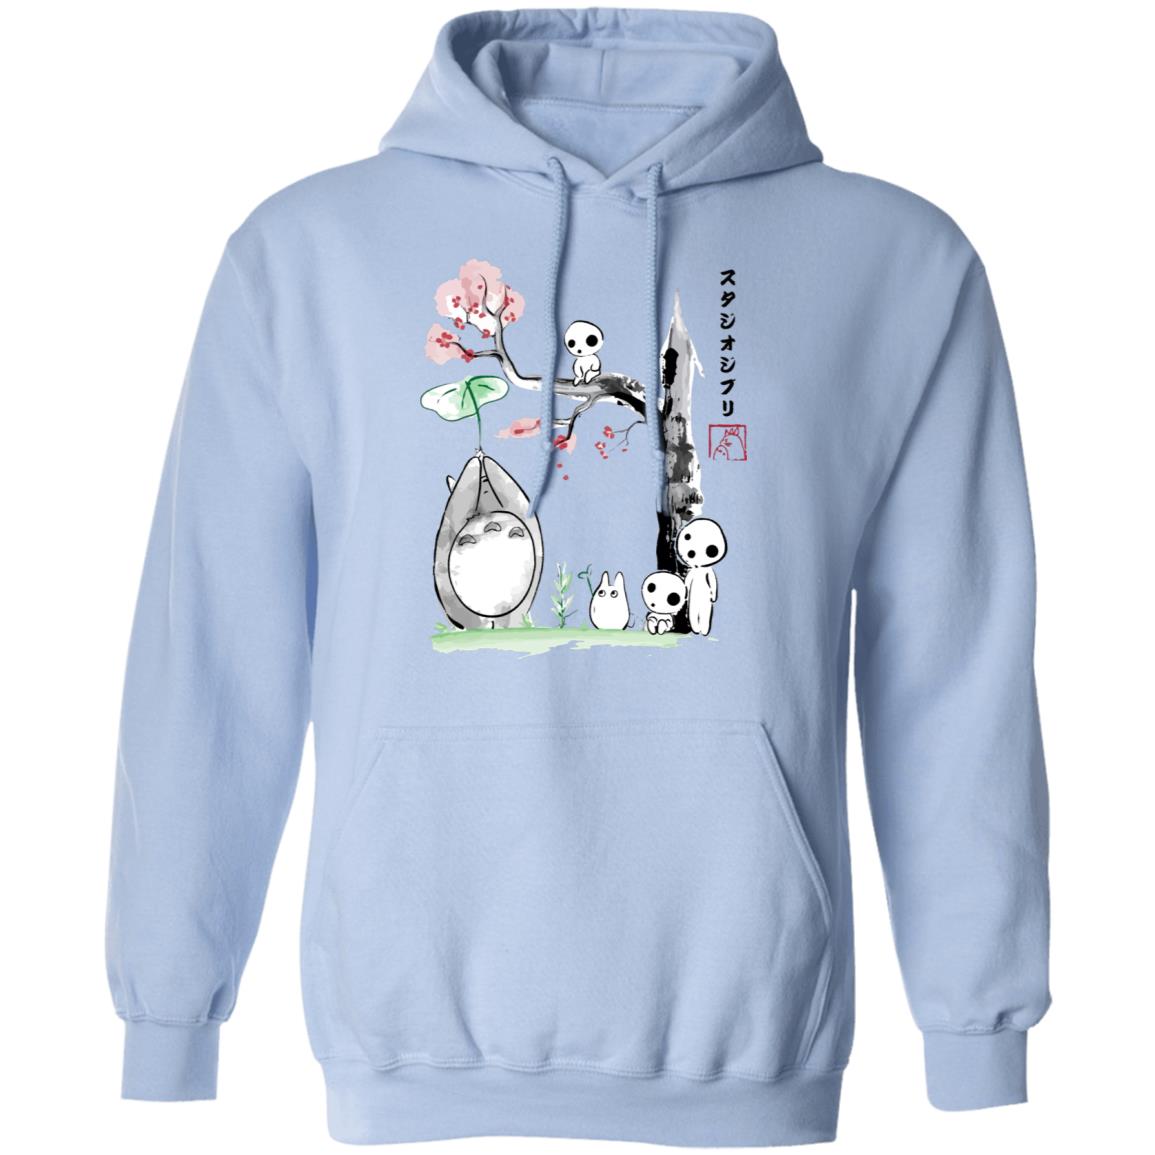 Totoro and the Tree Spirits Hoodie